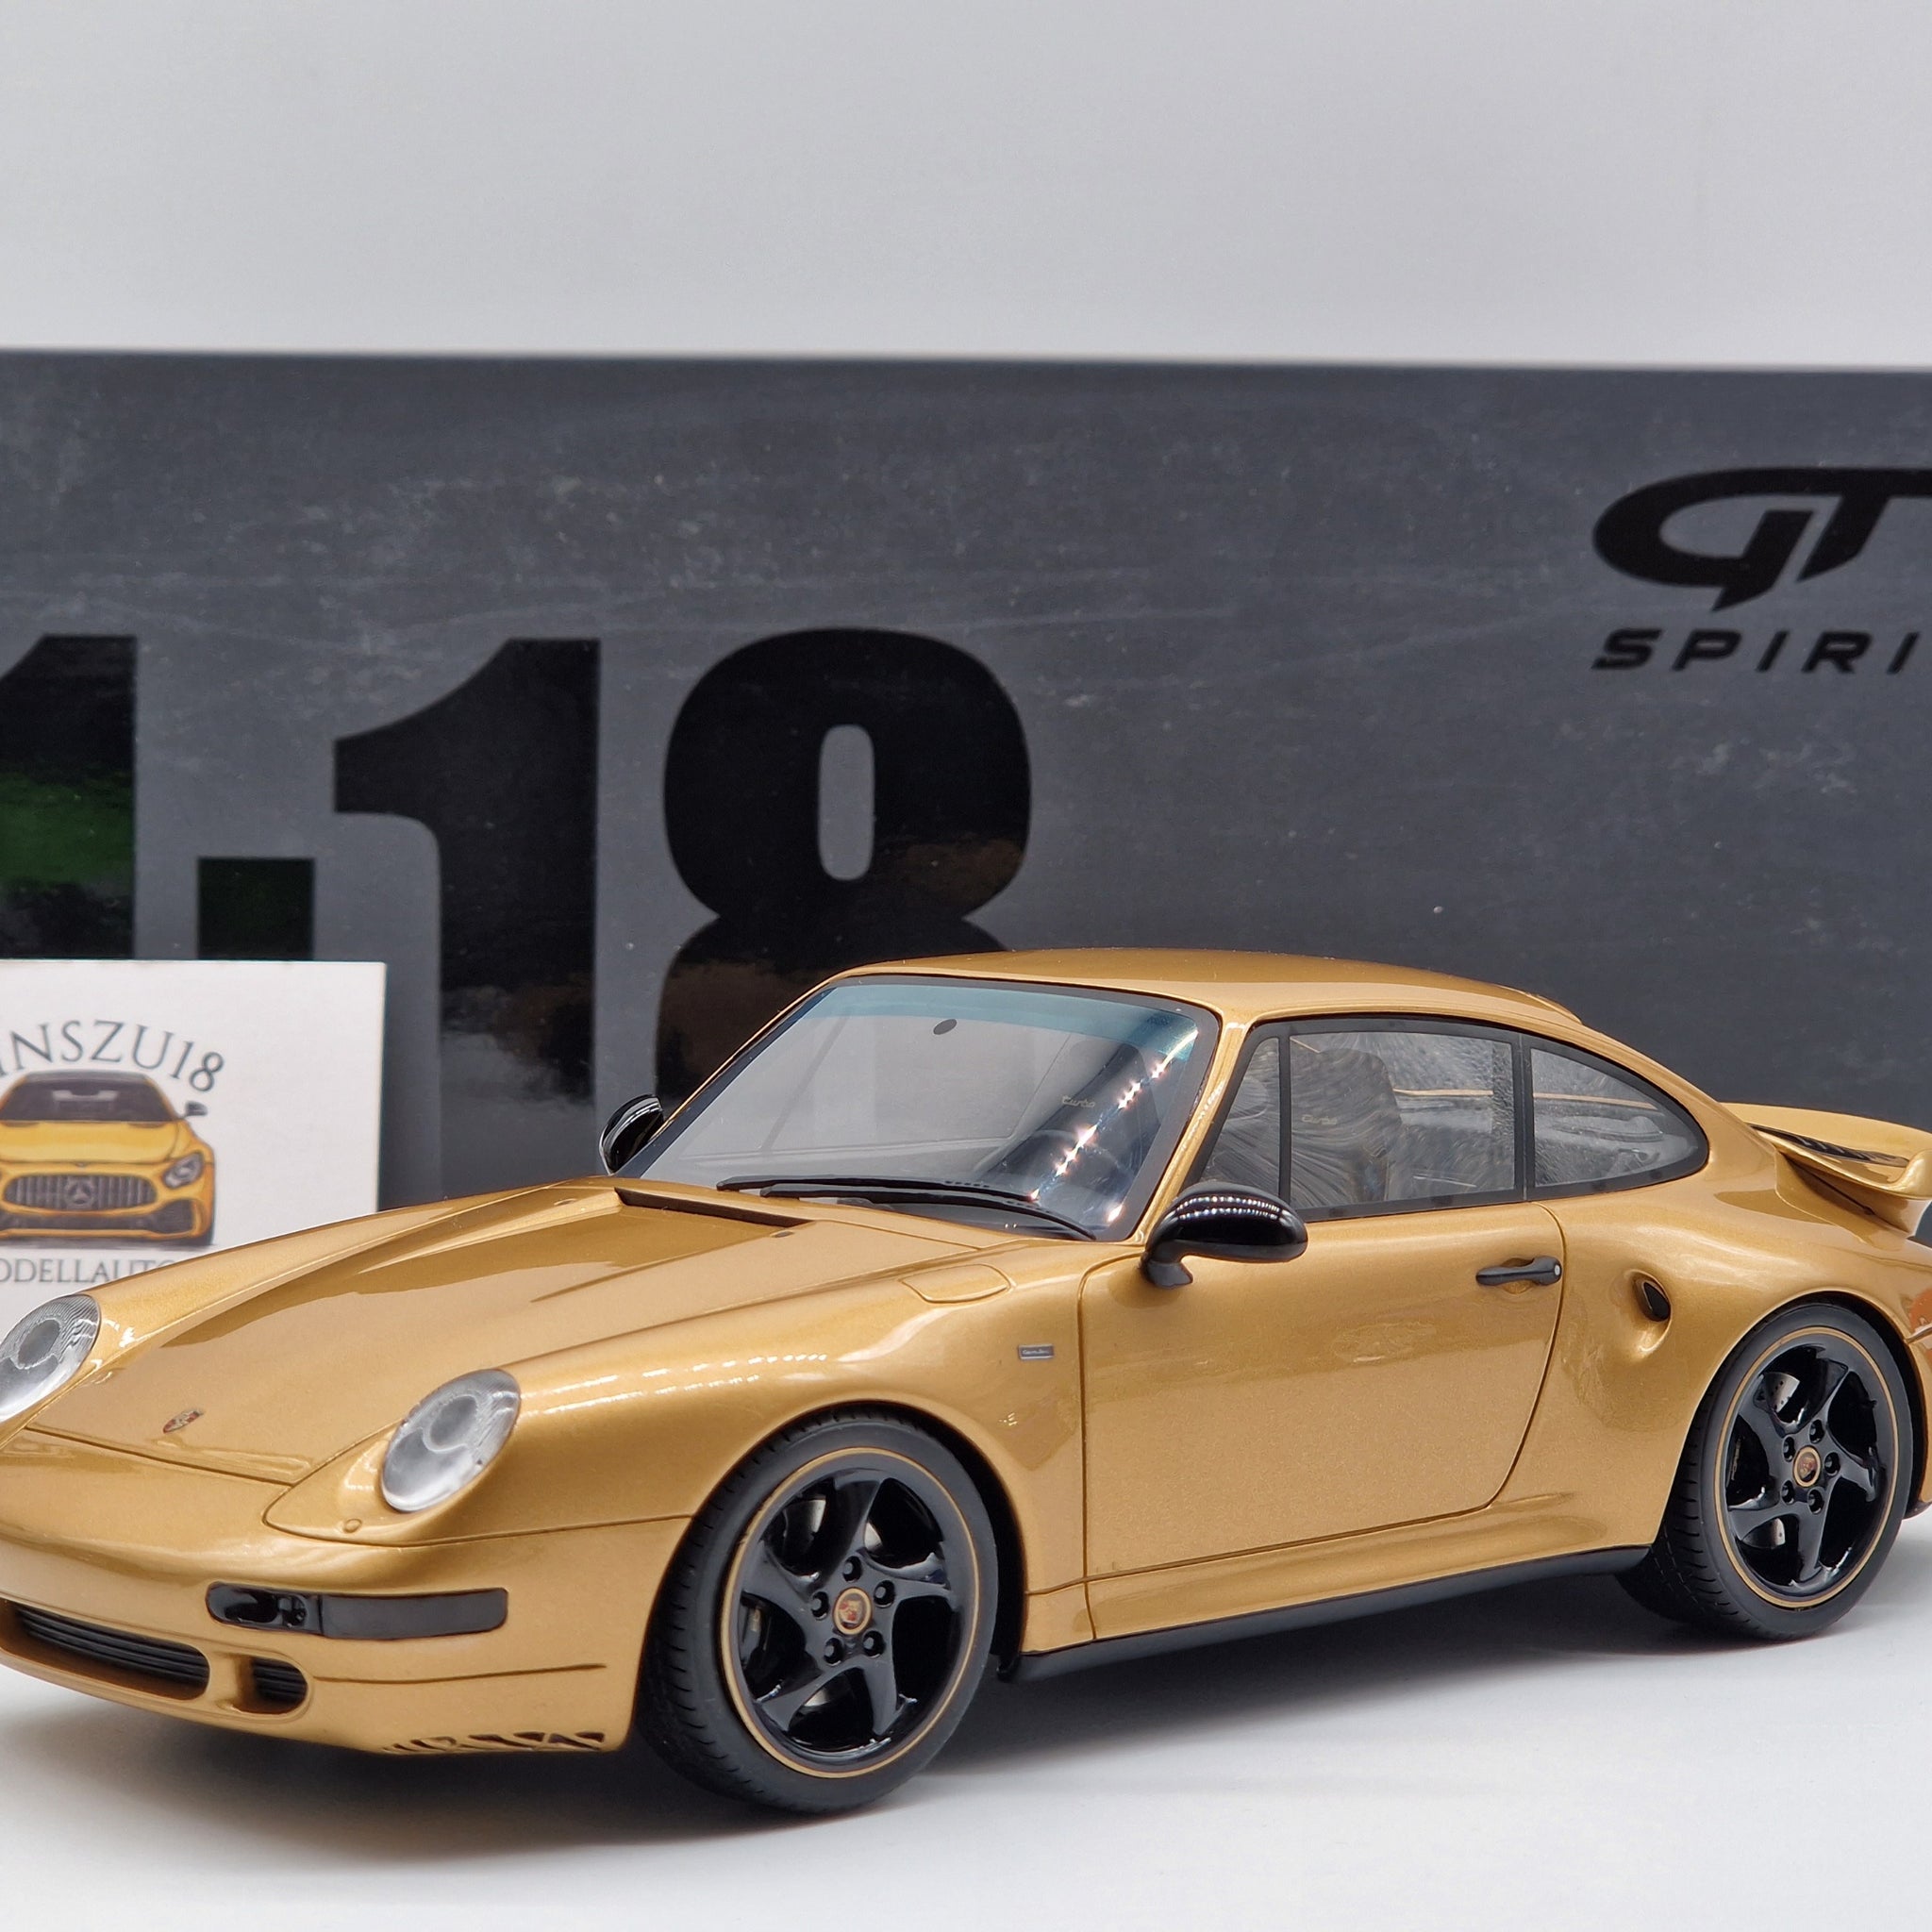 Porsche 911 (993) 2018 TURBO S Project Gold